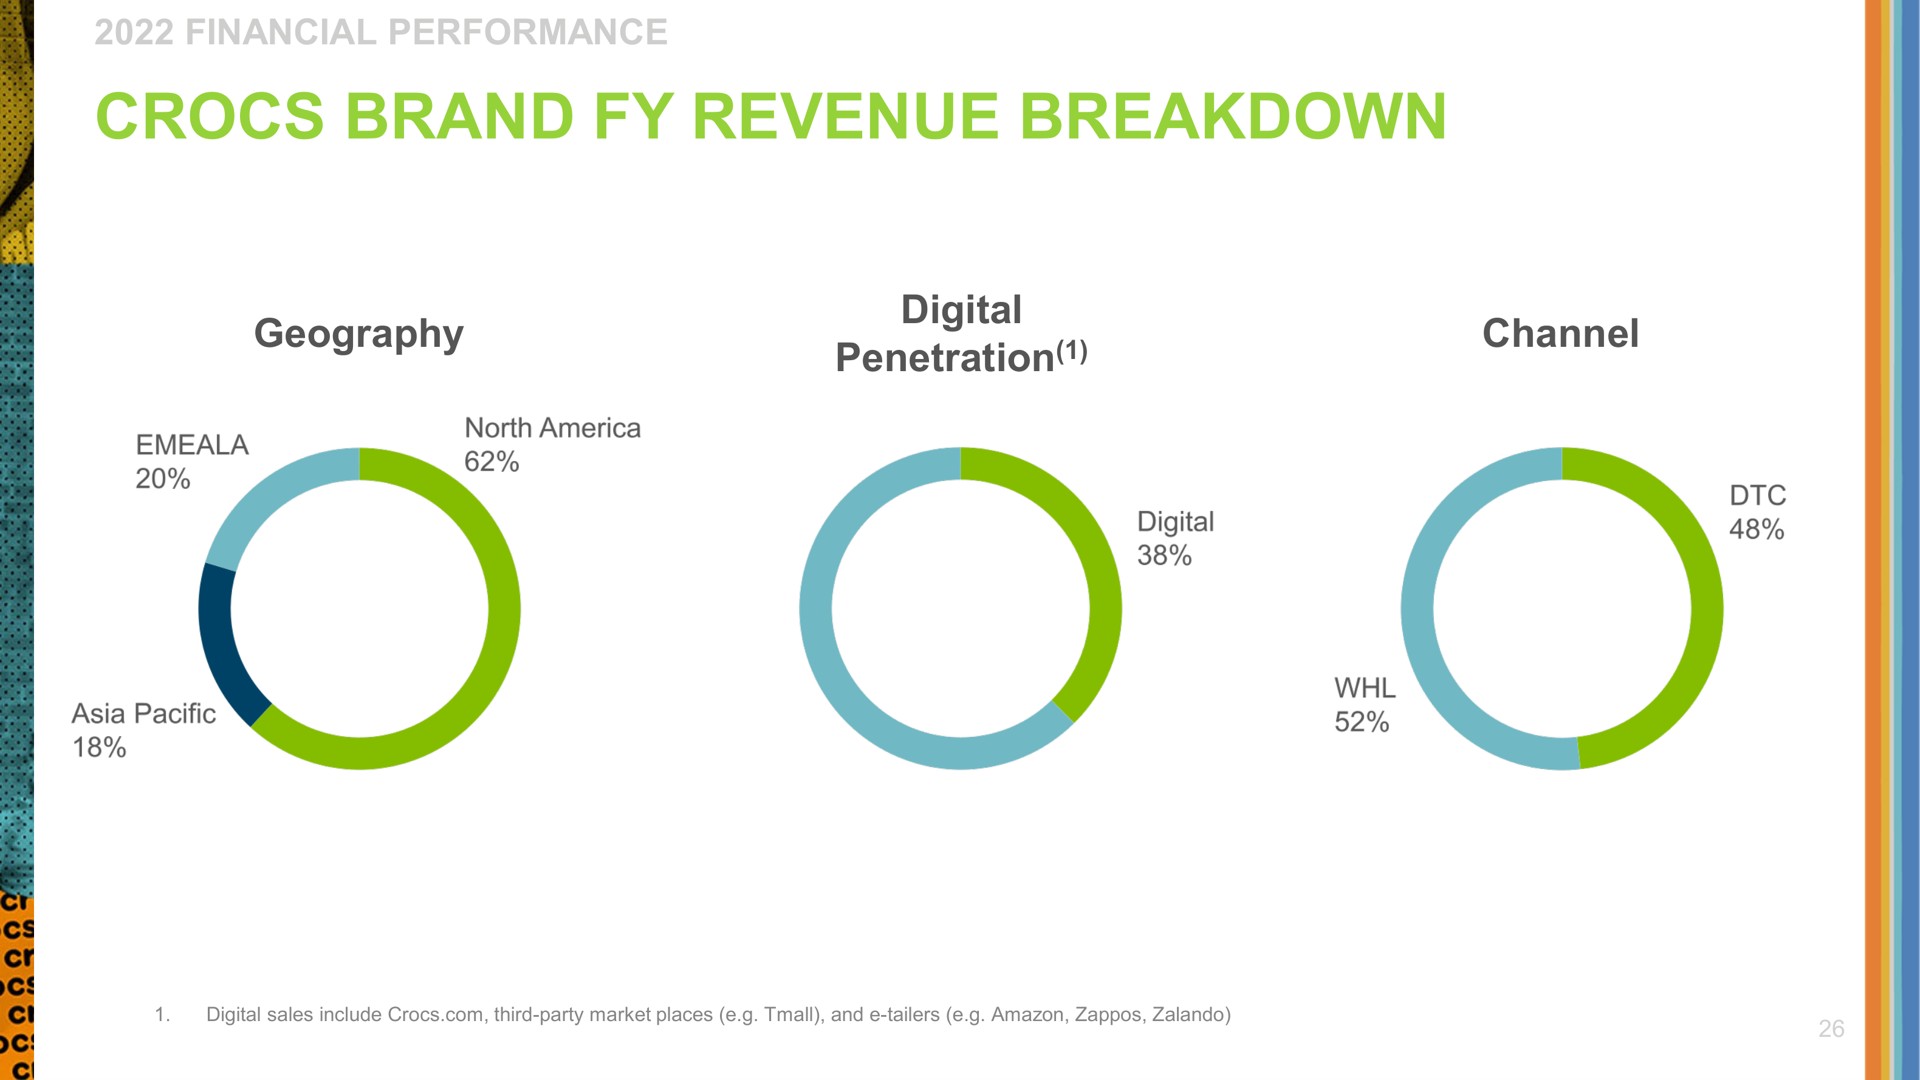 brand revenue breakdown | Crocs